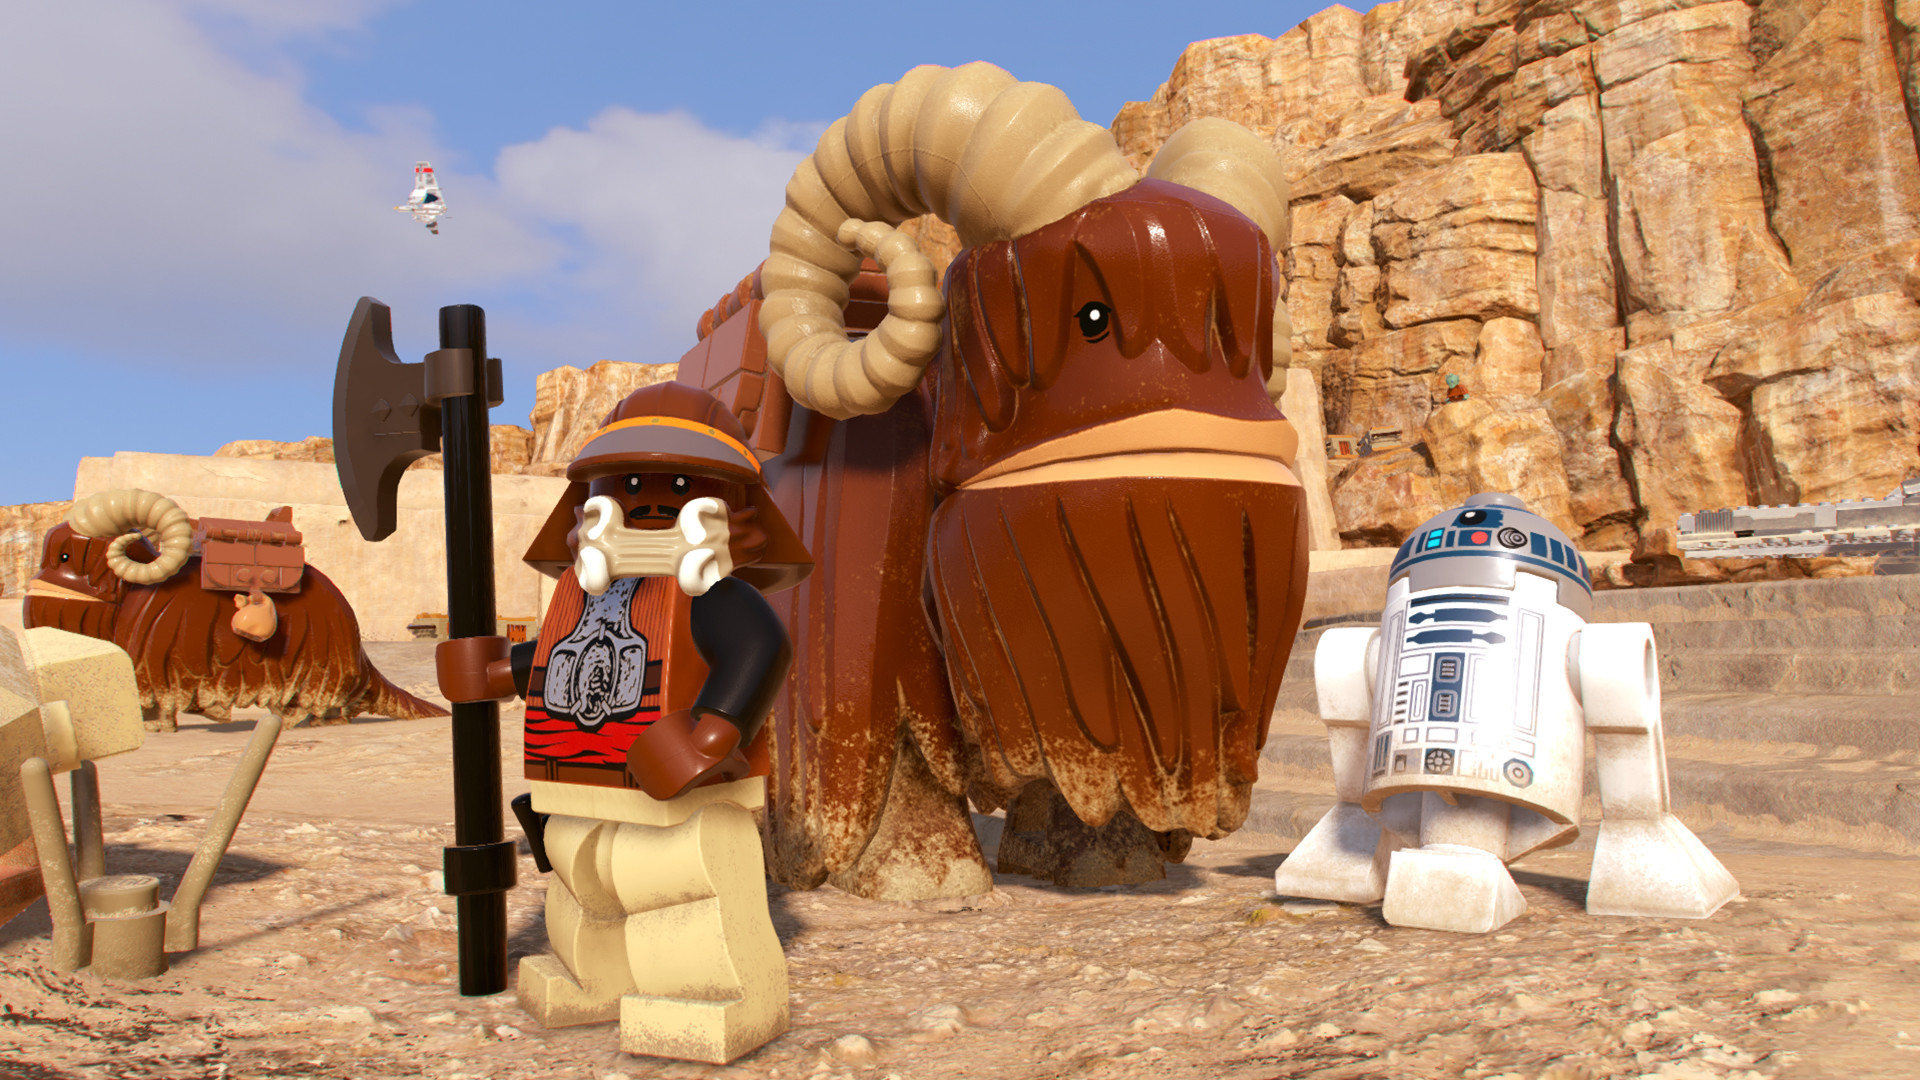 LEGO Star Wars: The Skywalker Saga Deluxe Edition + Pre-Order Bonus DLC Steam CD Key